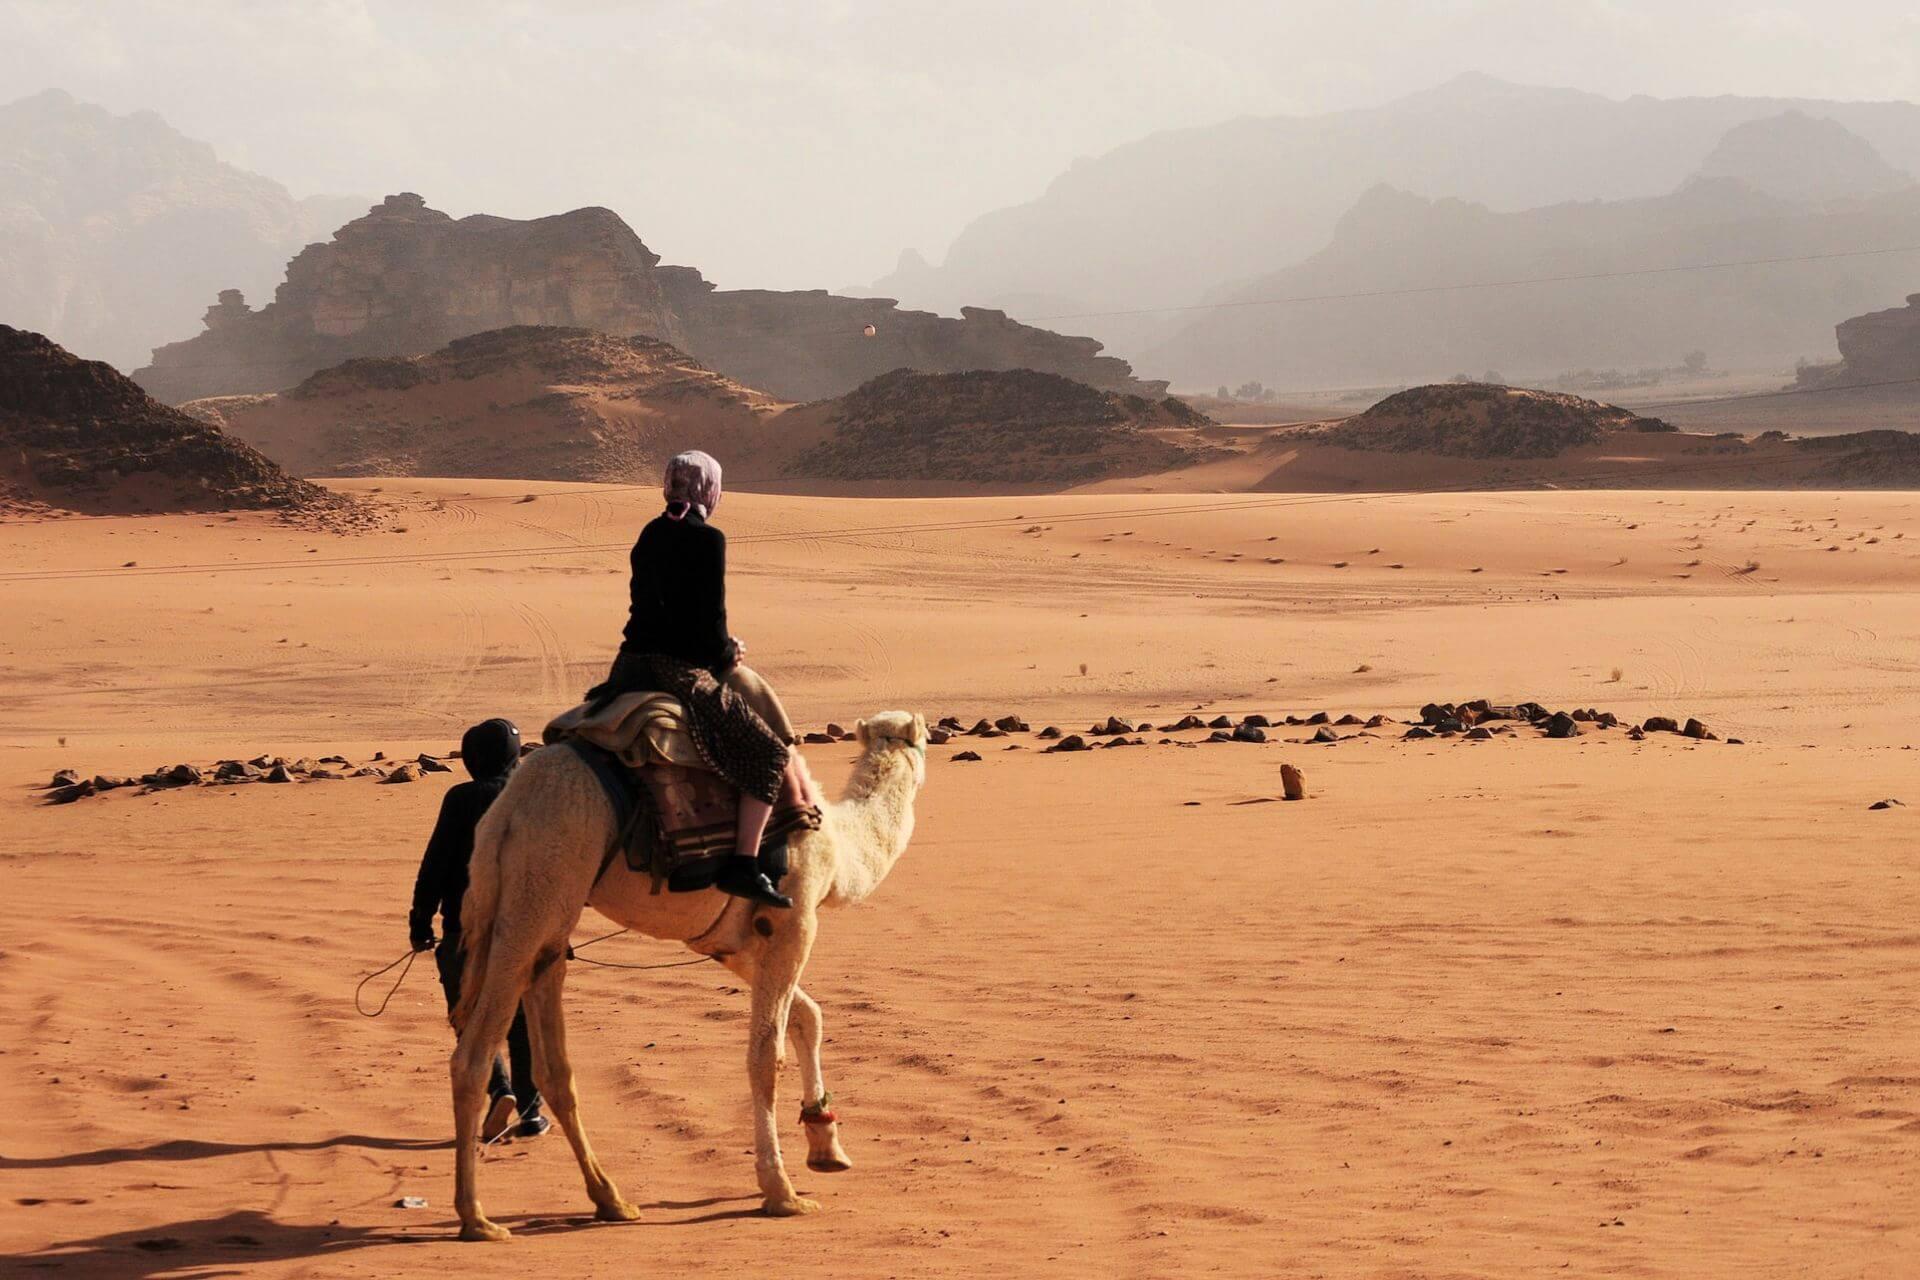 A person riding a camel in a desert in Jordan